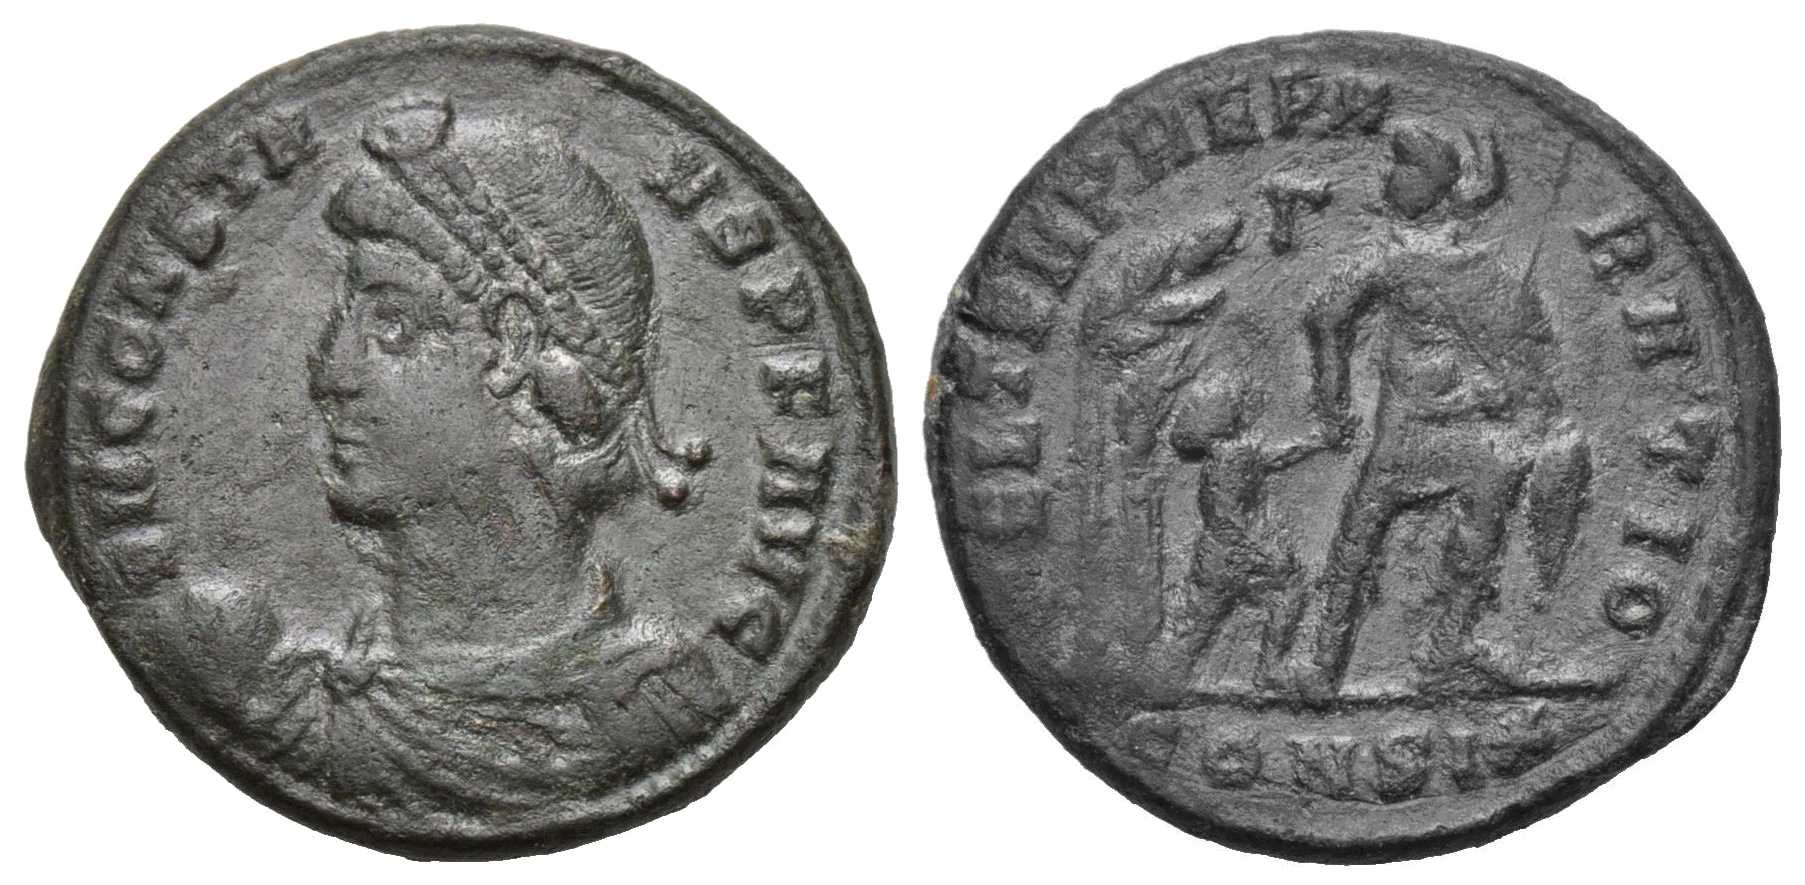 5628 Constantinopolis Thracia Constans I AE